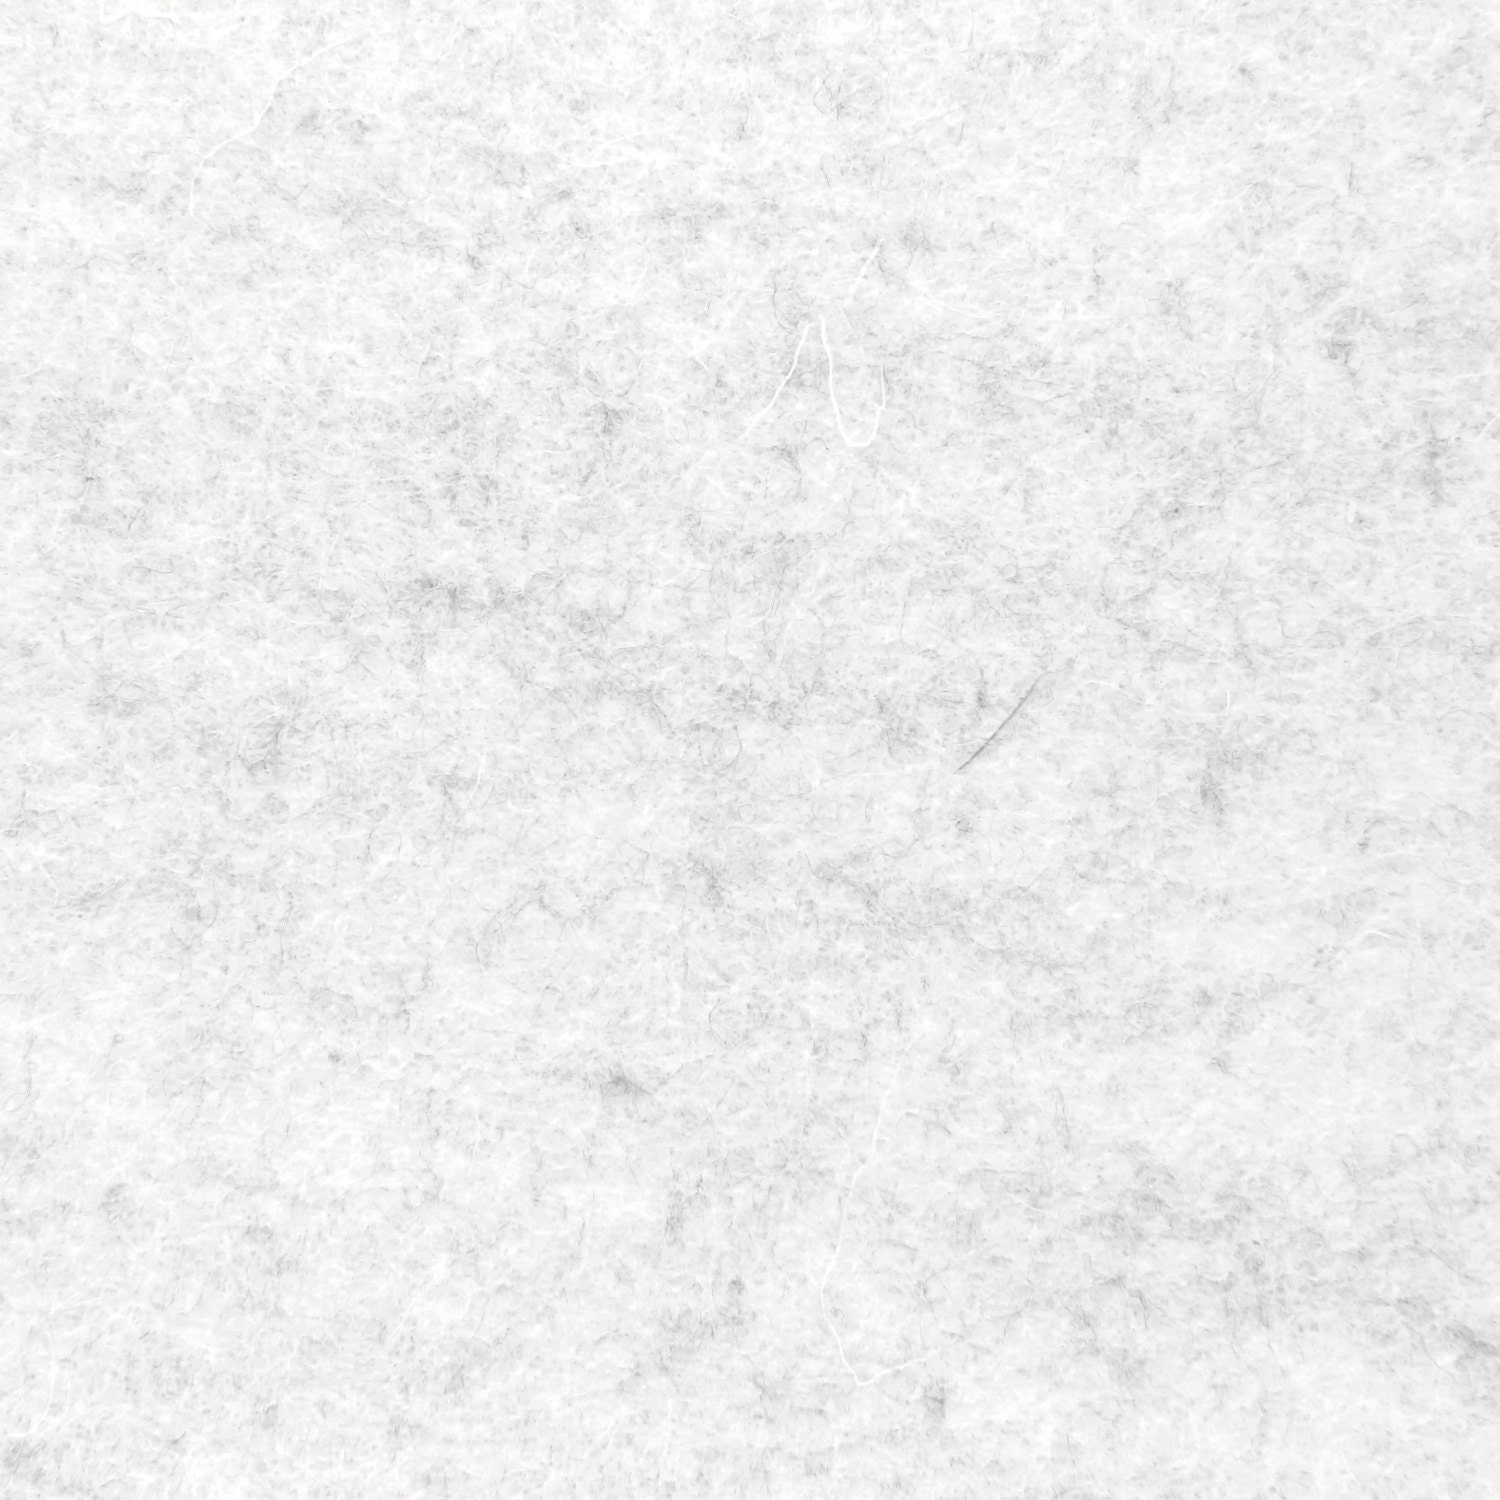 50 x 183 cm white wool felt roll 1mm | 100% European wool